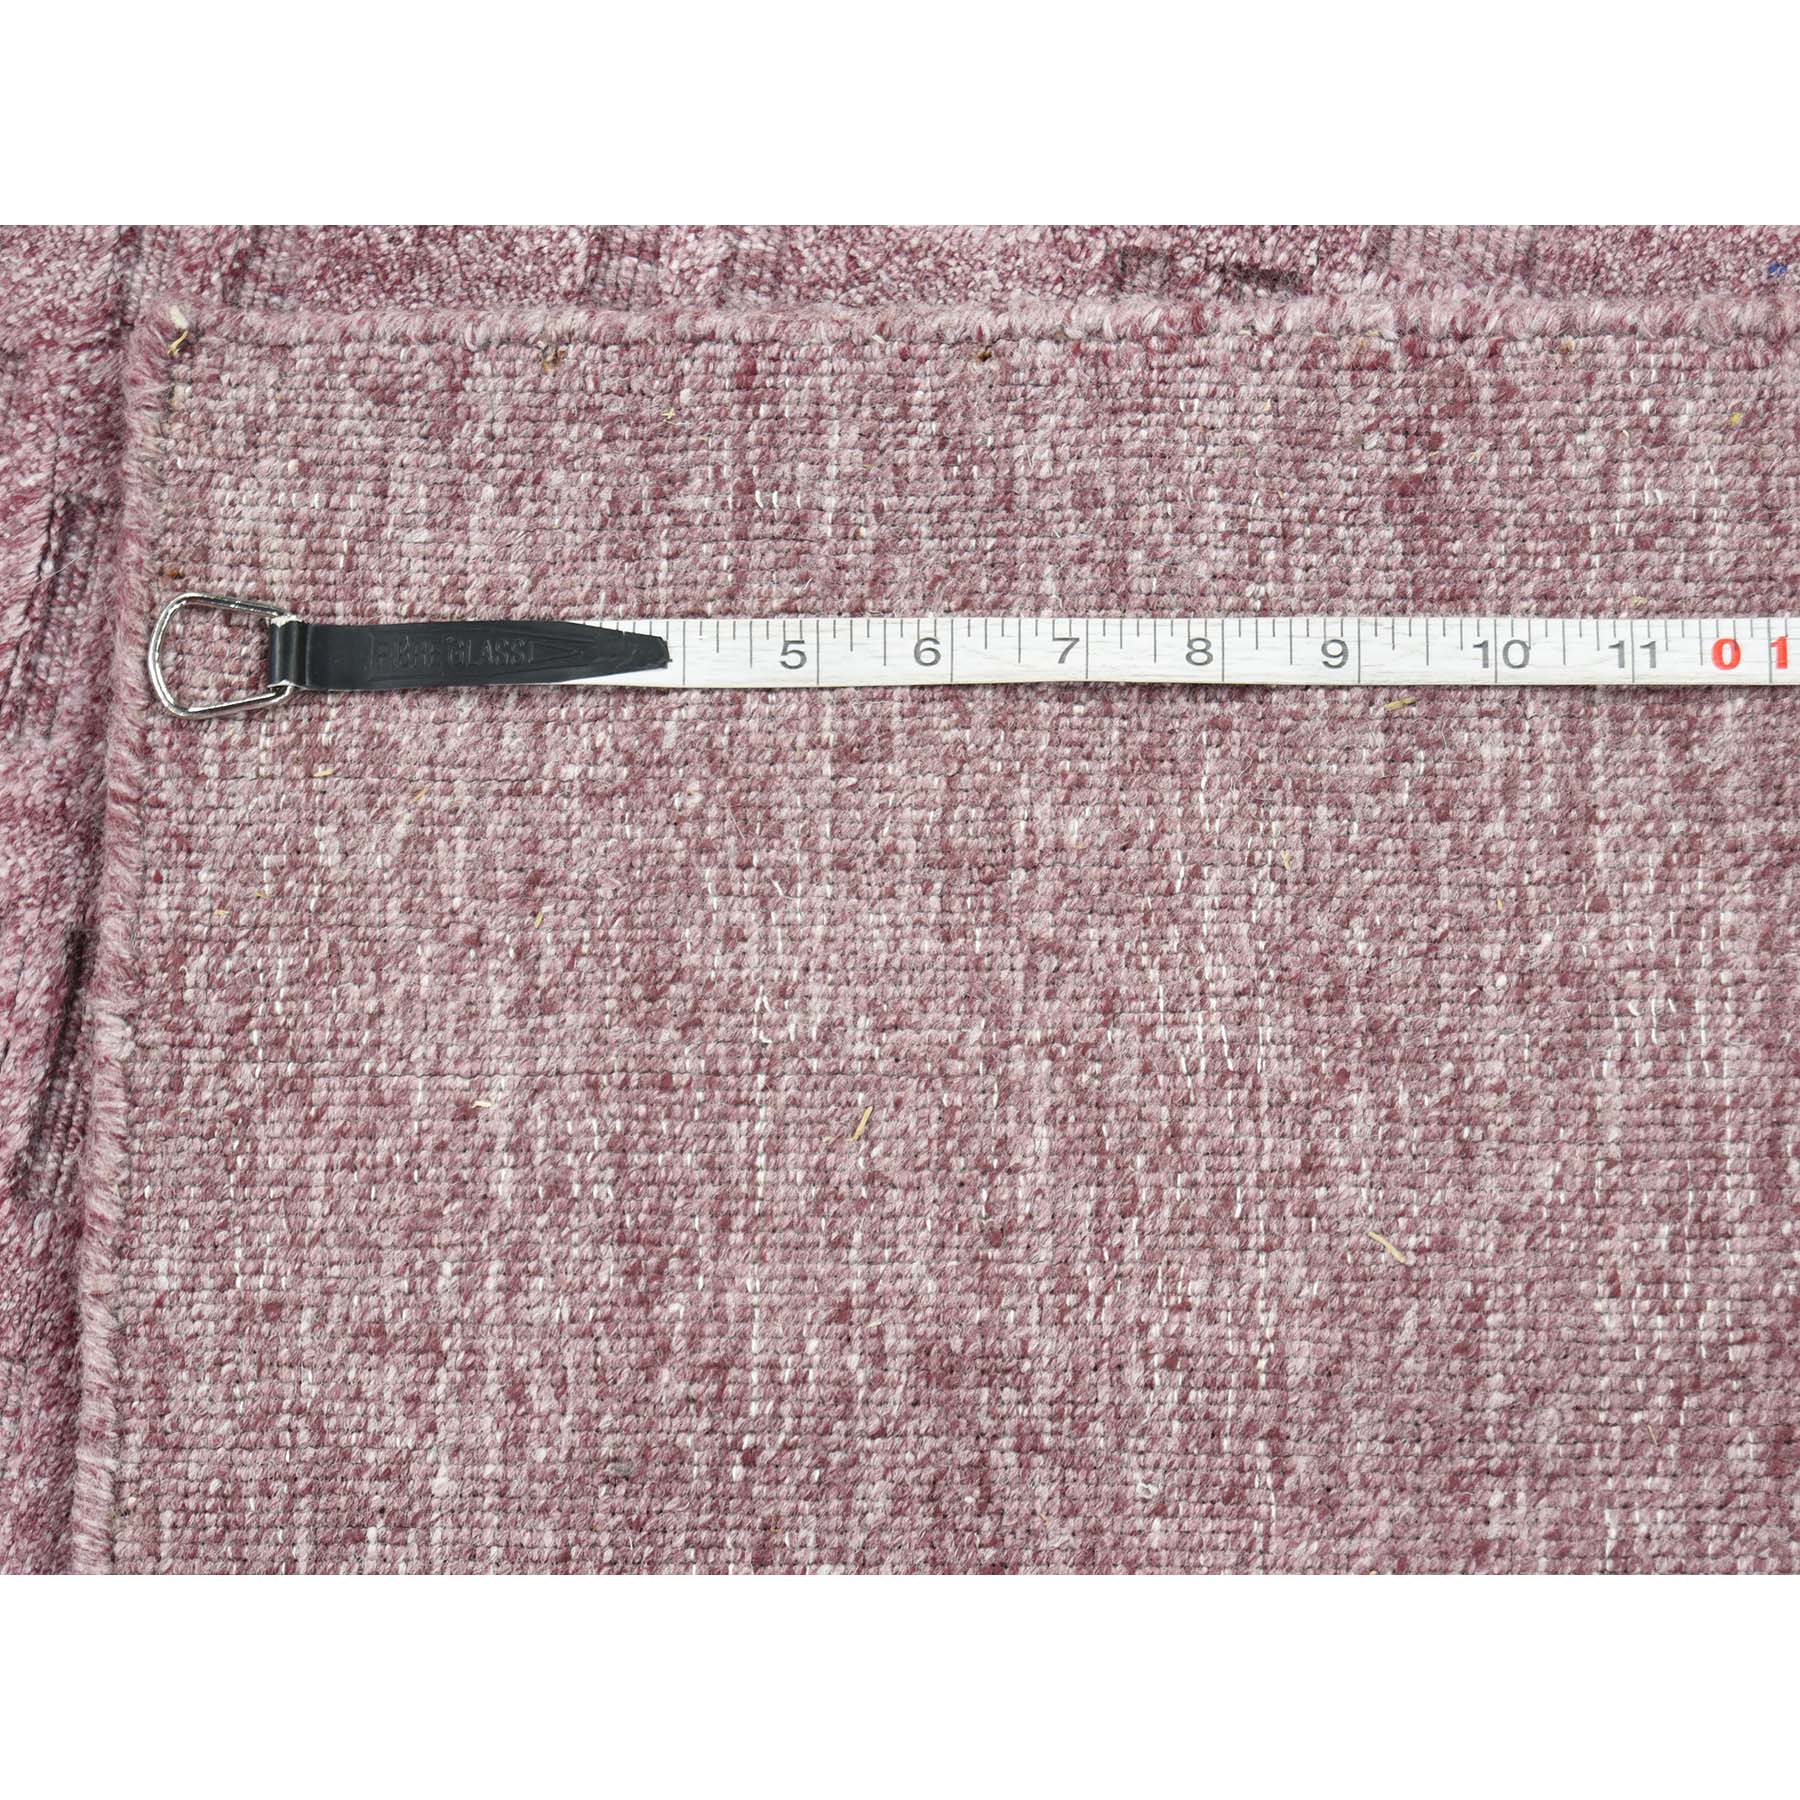 5-x7- Tone on Tone Purple Pure Wool Hand Loomed Oriental Rug 